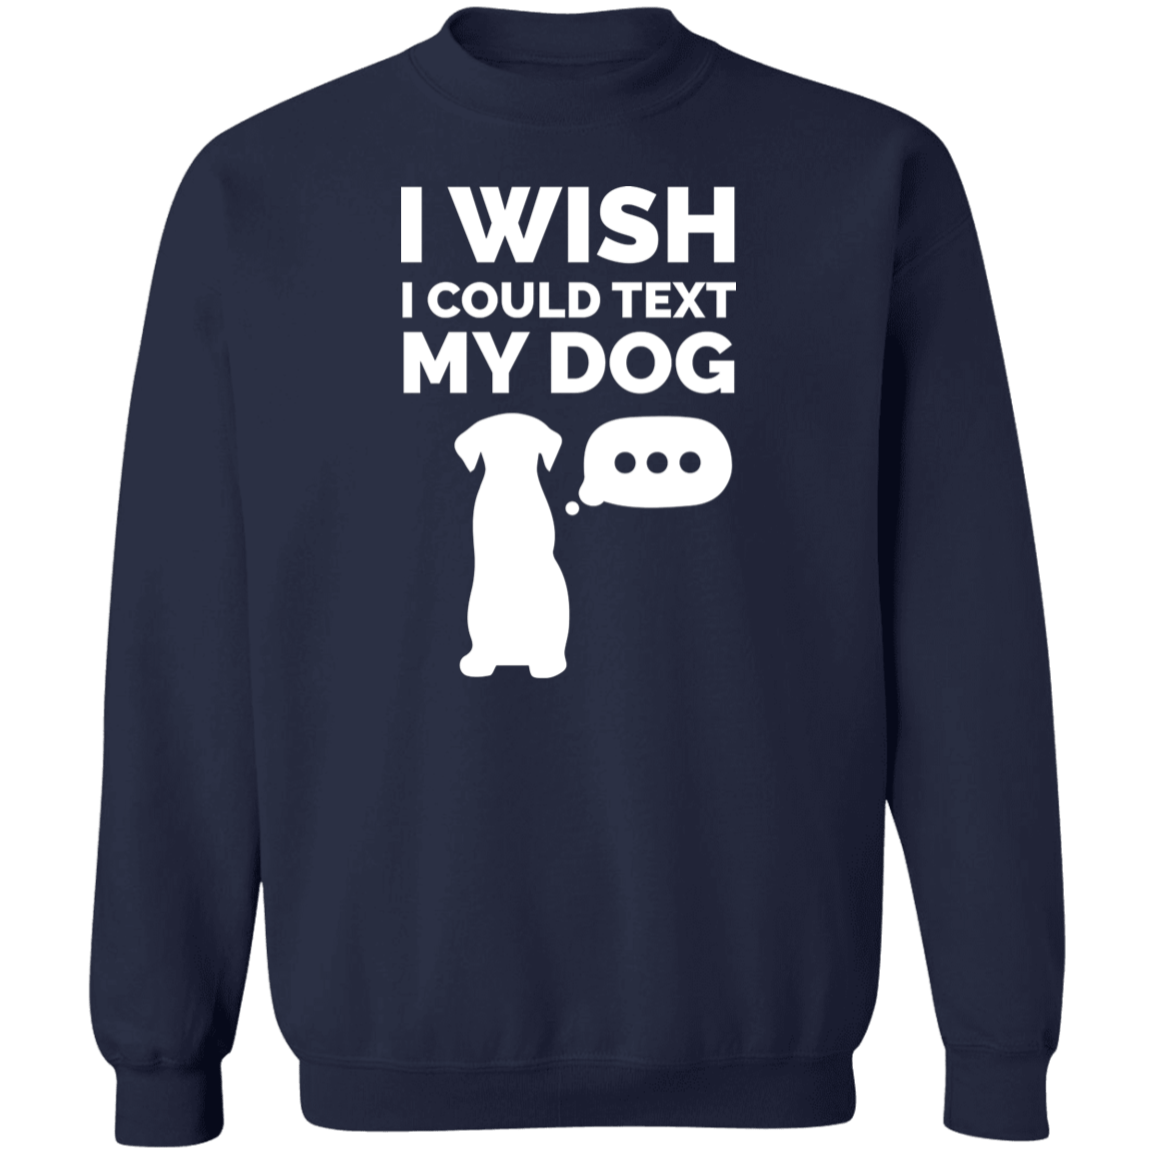 I Wish I Could Text My Dog - Sweatshirt.